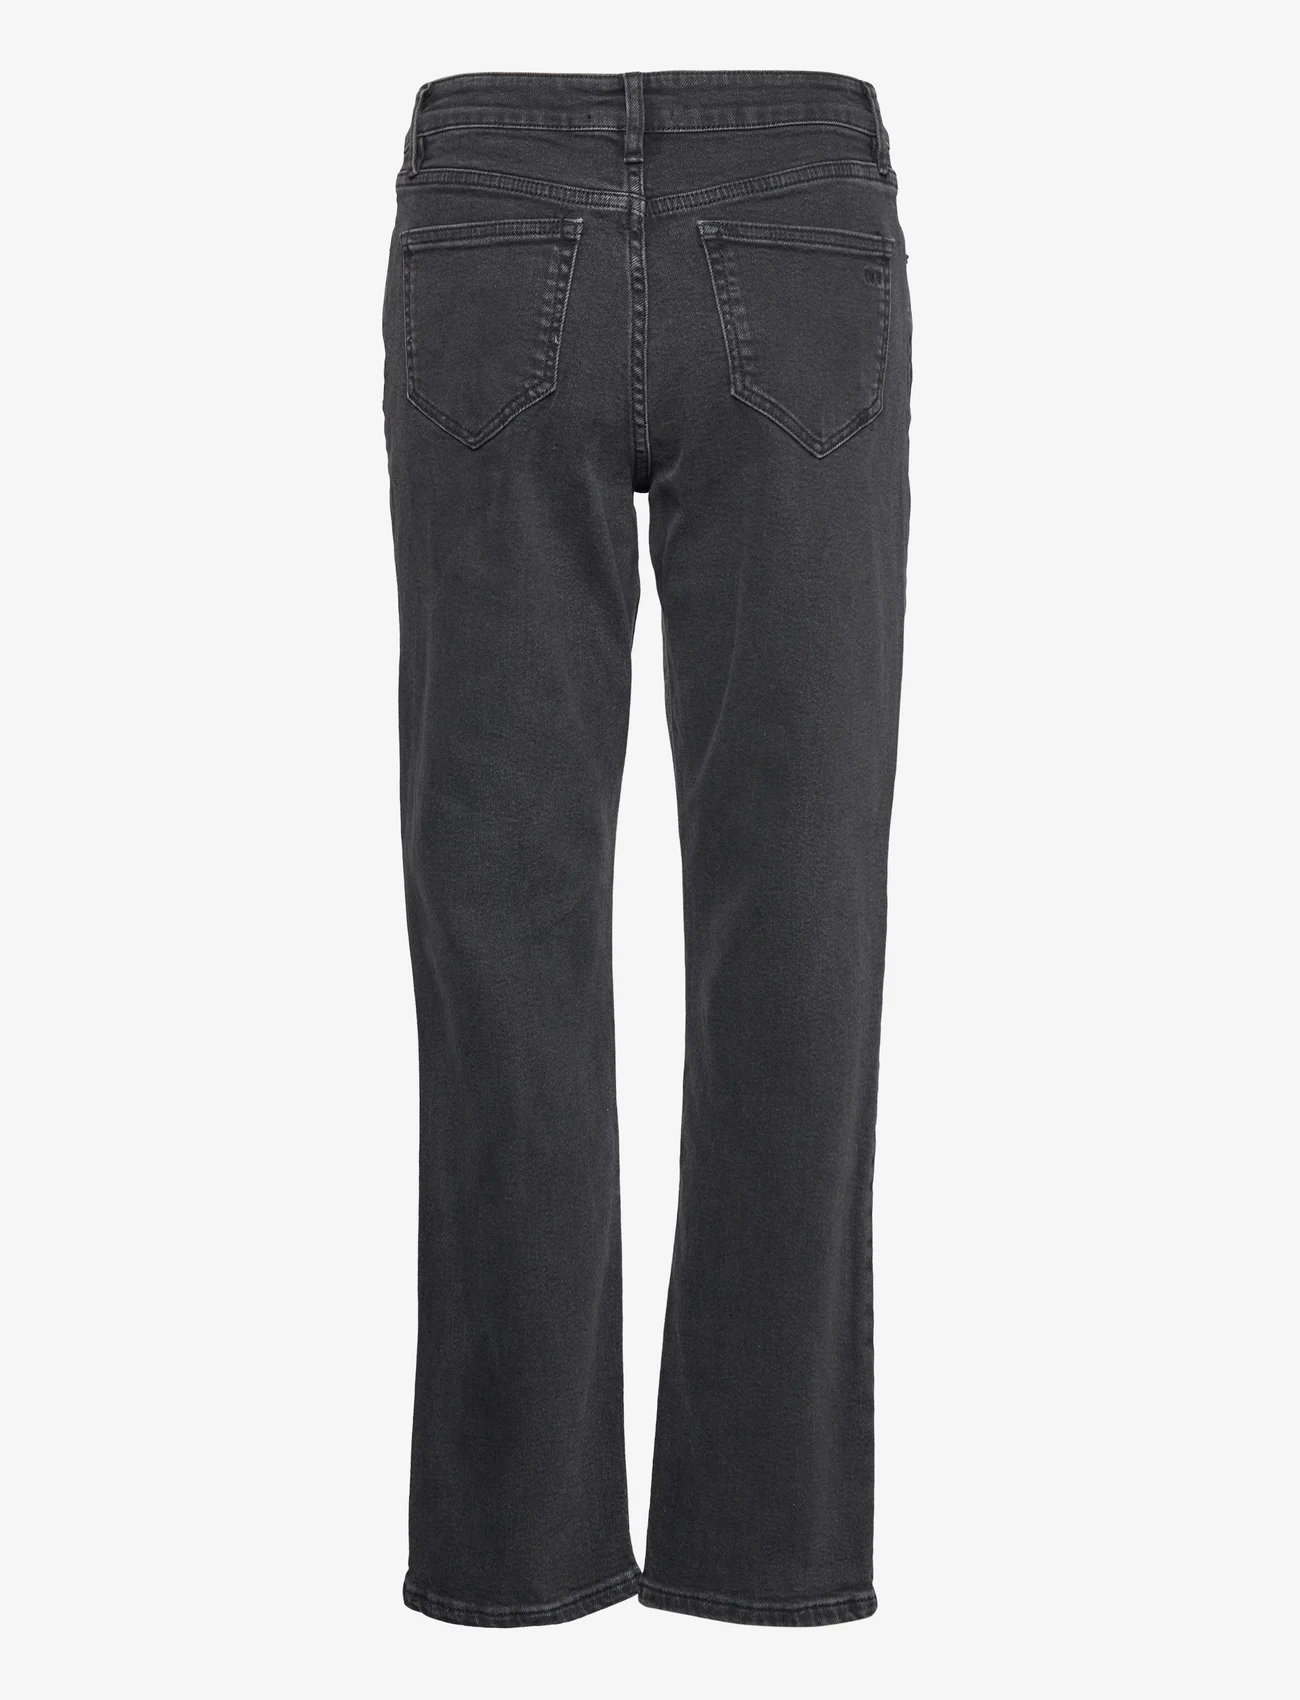 IVY Copenhagen - Tonya Jeans Wash Original Black - alt kitsenevad teksat - black - 1